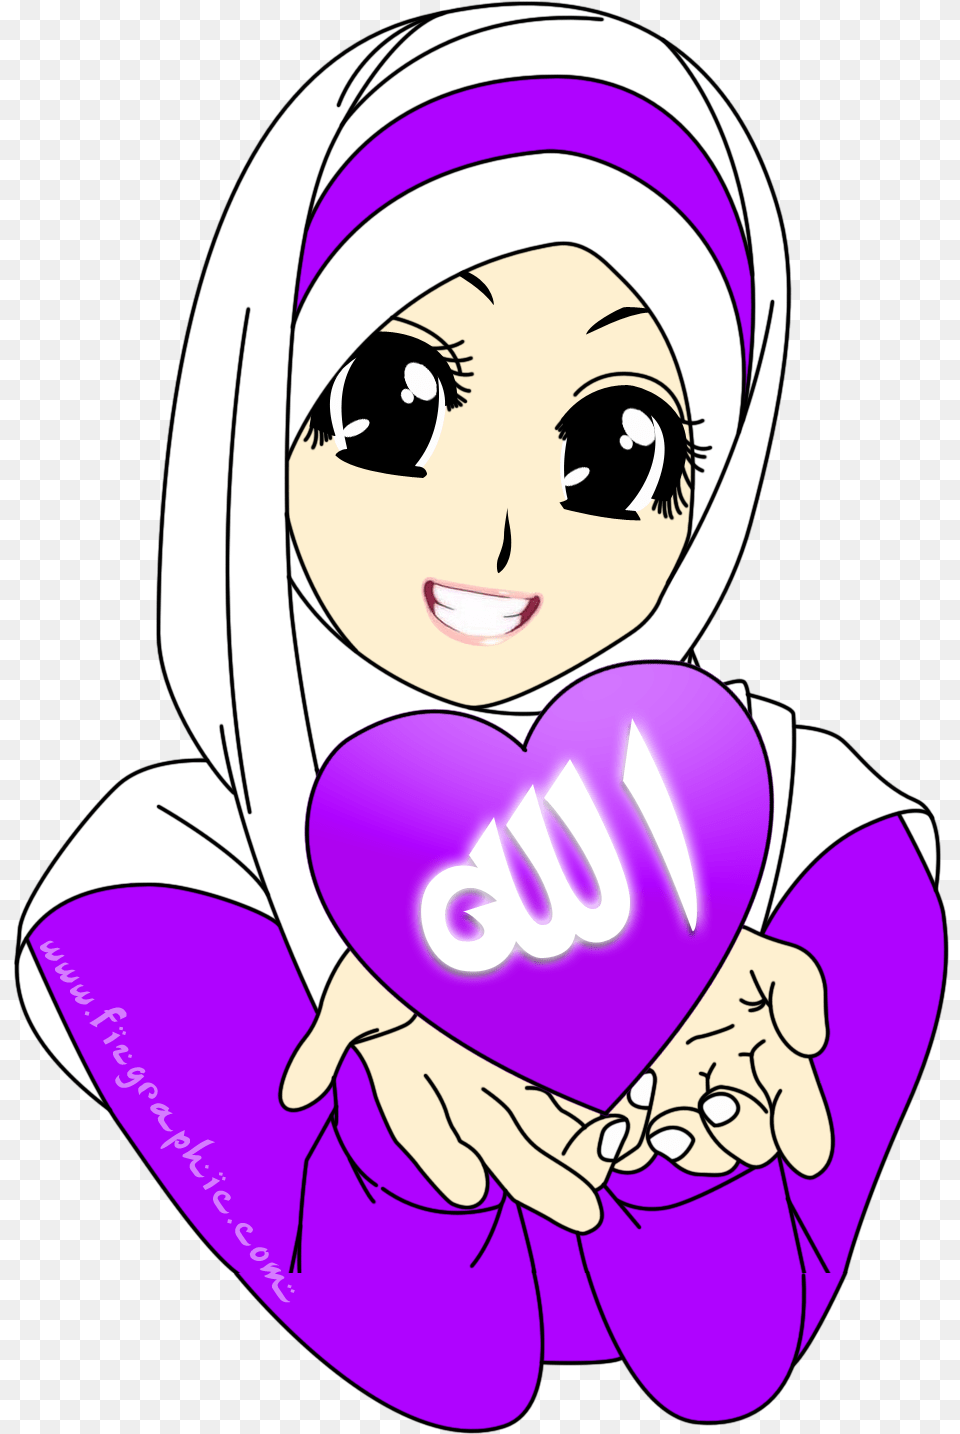 Gambar Kartun Muslimah Warna Ungu Keren Gasebo Wallpaper Hijab Cartoon, Book, Comics, Publication, Adult Free Png Download